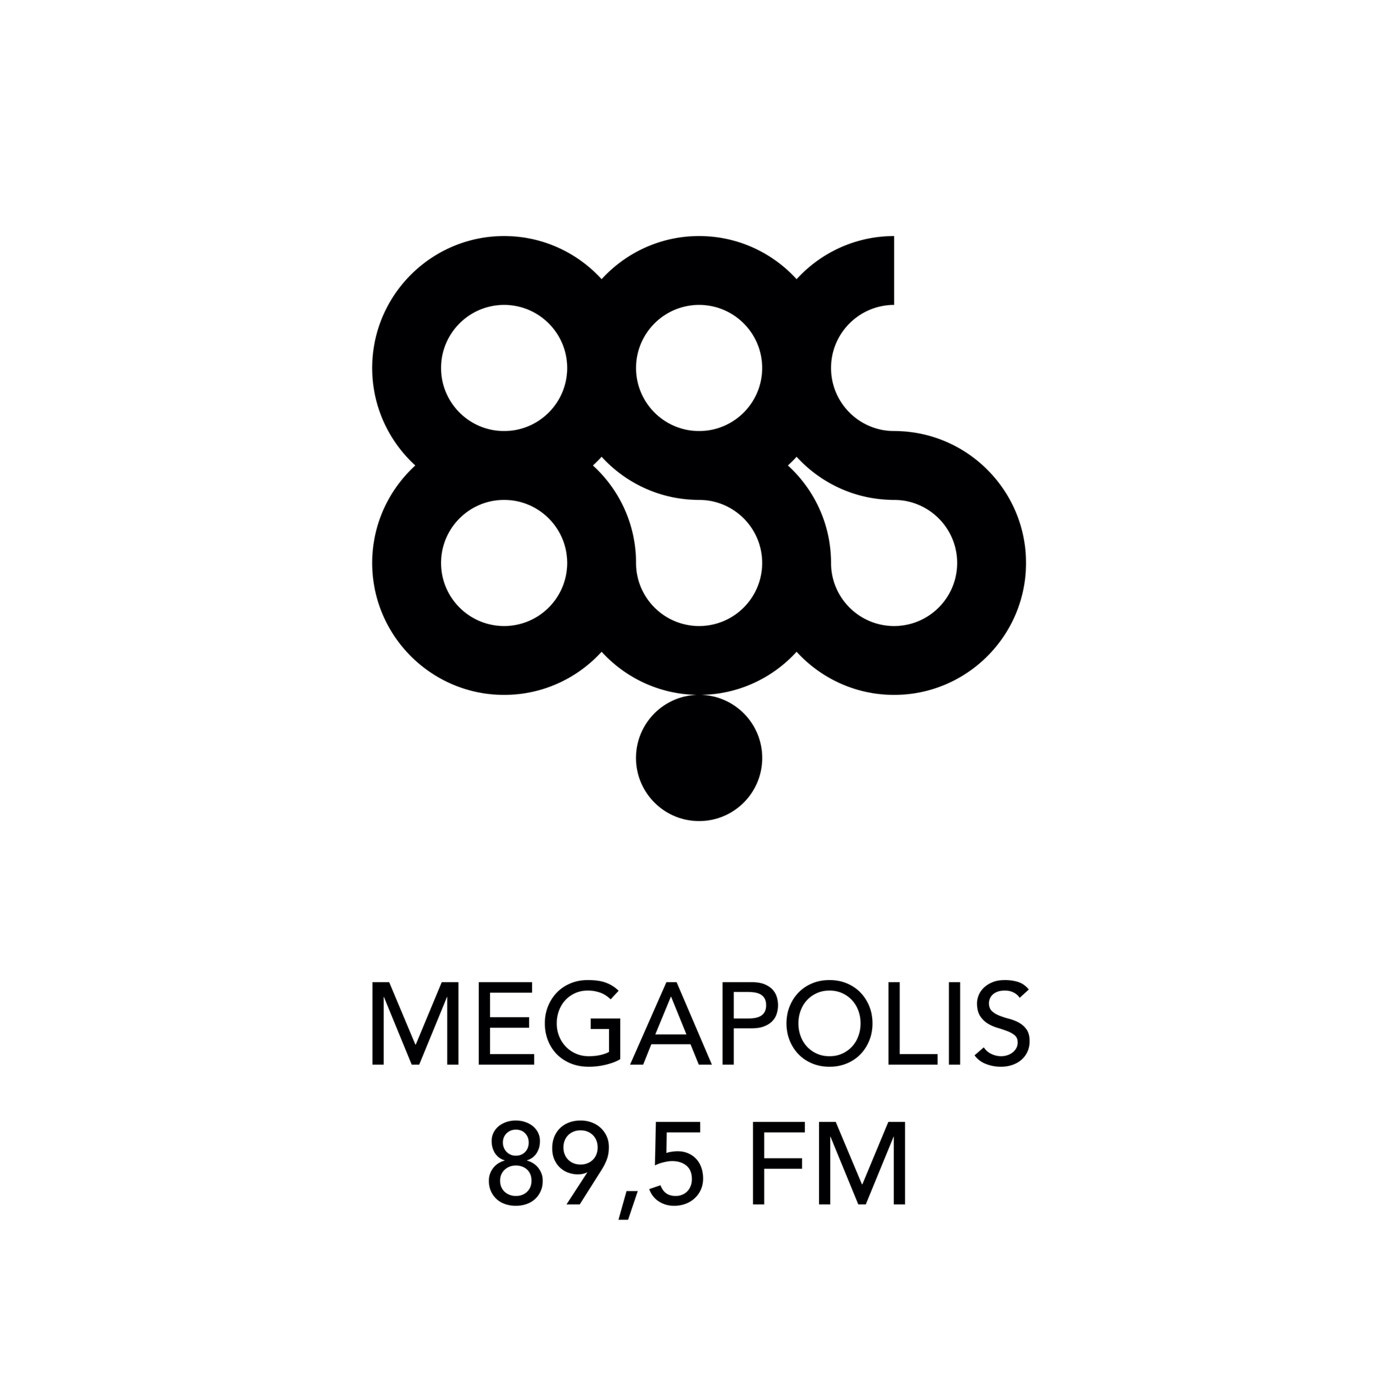 Cosmonaut - Megabeat @ Megapolis 89.5 FM 23.02.2022 #895